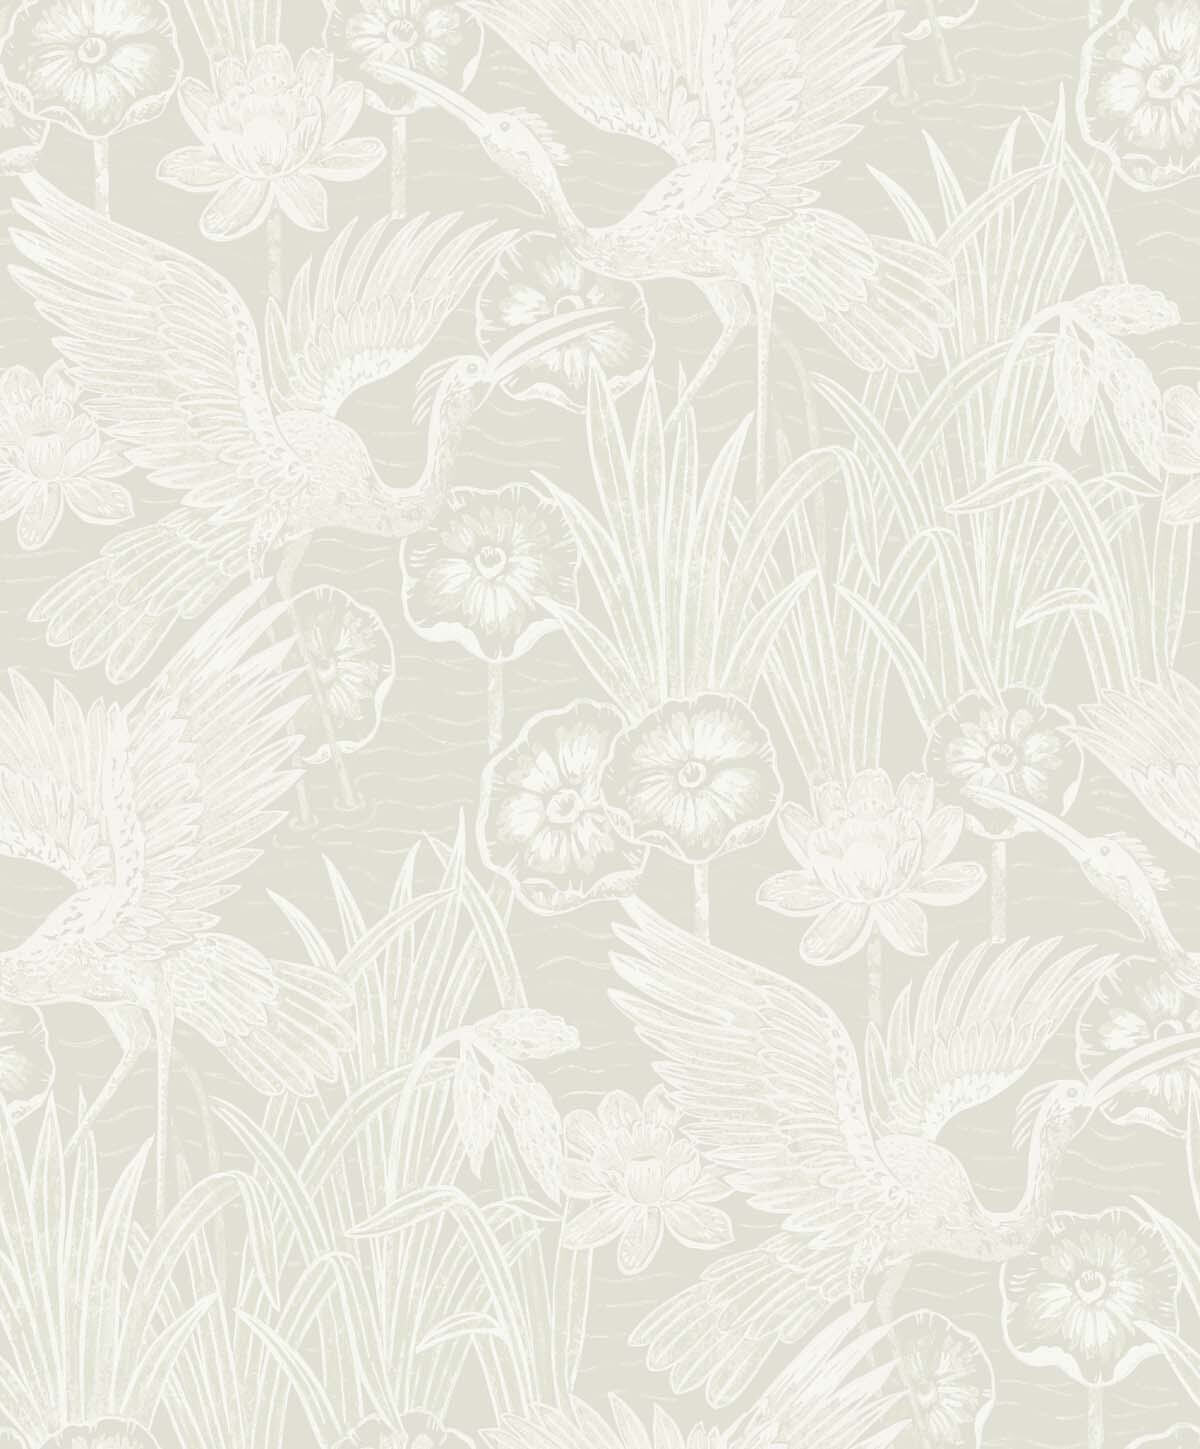 Seabrook White Heron Marsh Cranes Wallpaper - Daylight